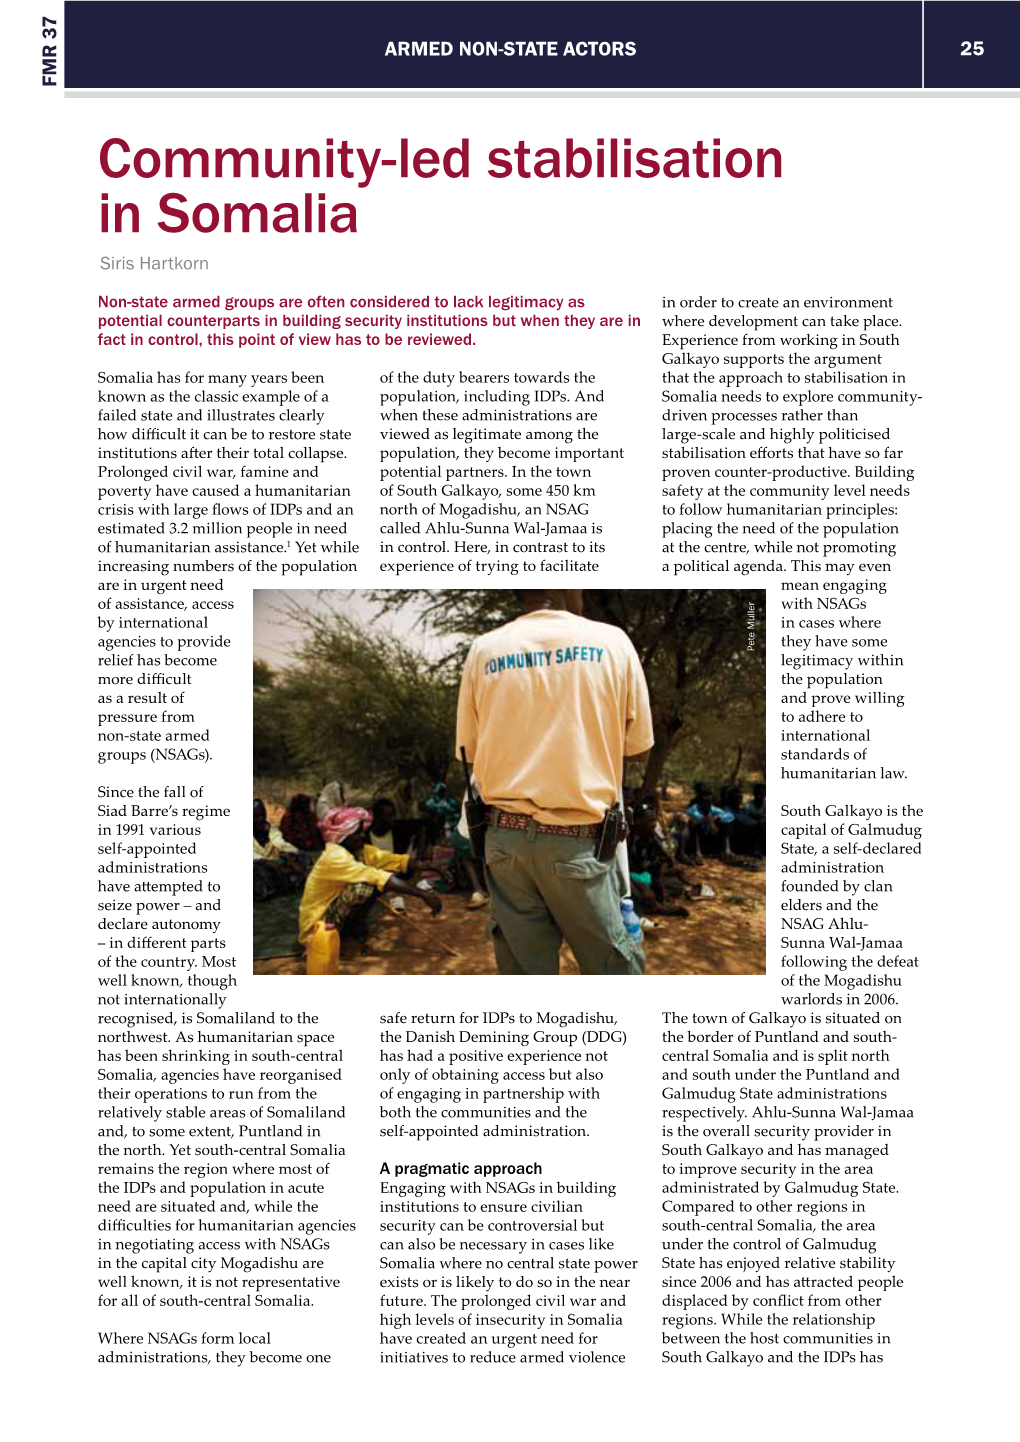 Community-Led Stabilisation in Somalia Siris Hartkorn